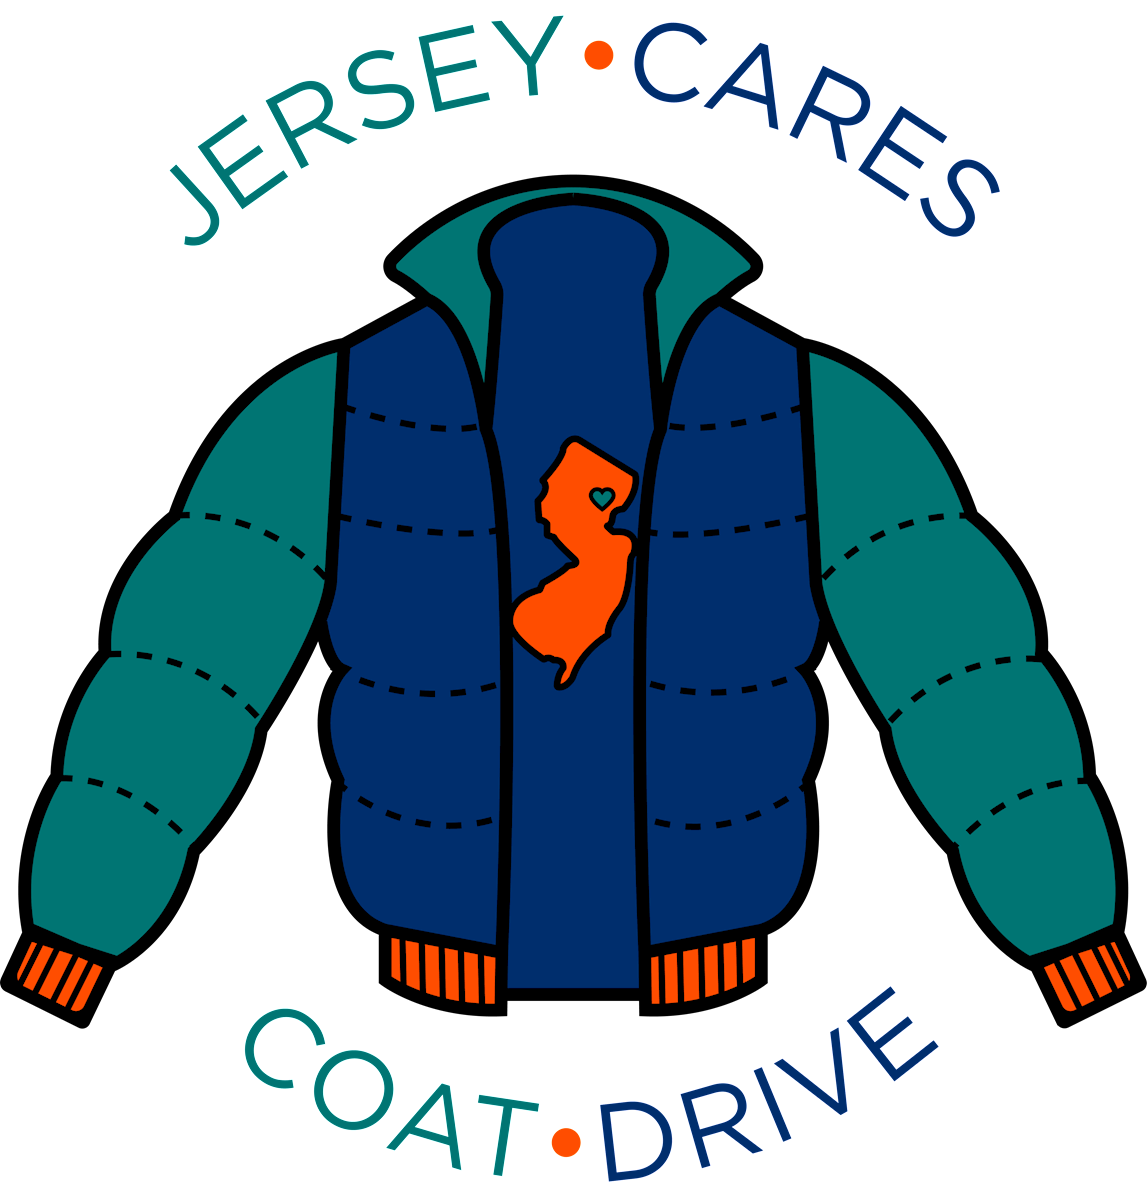 Jersey Cares Coat Drive